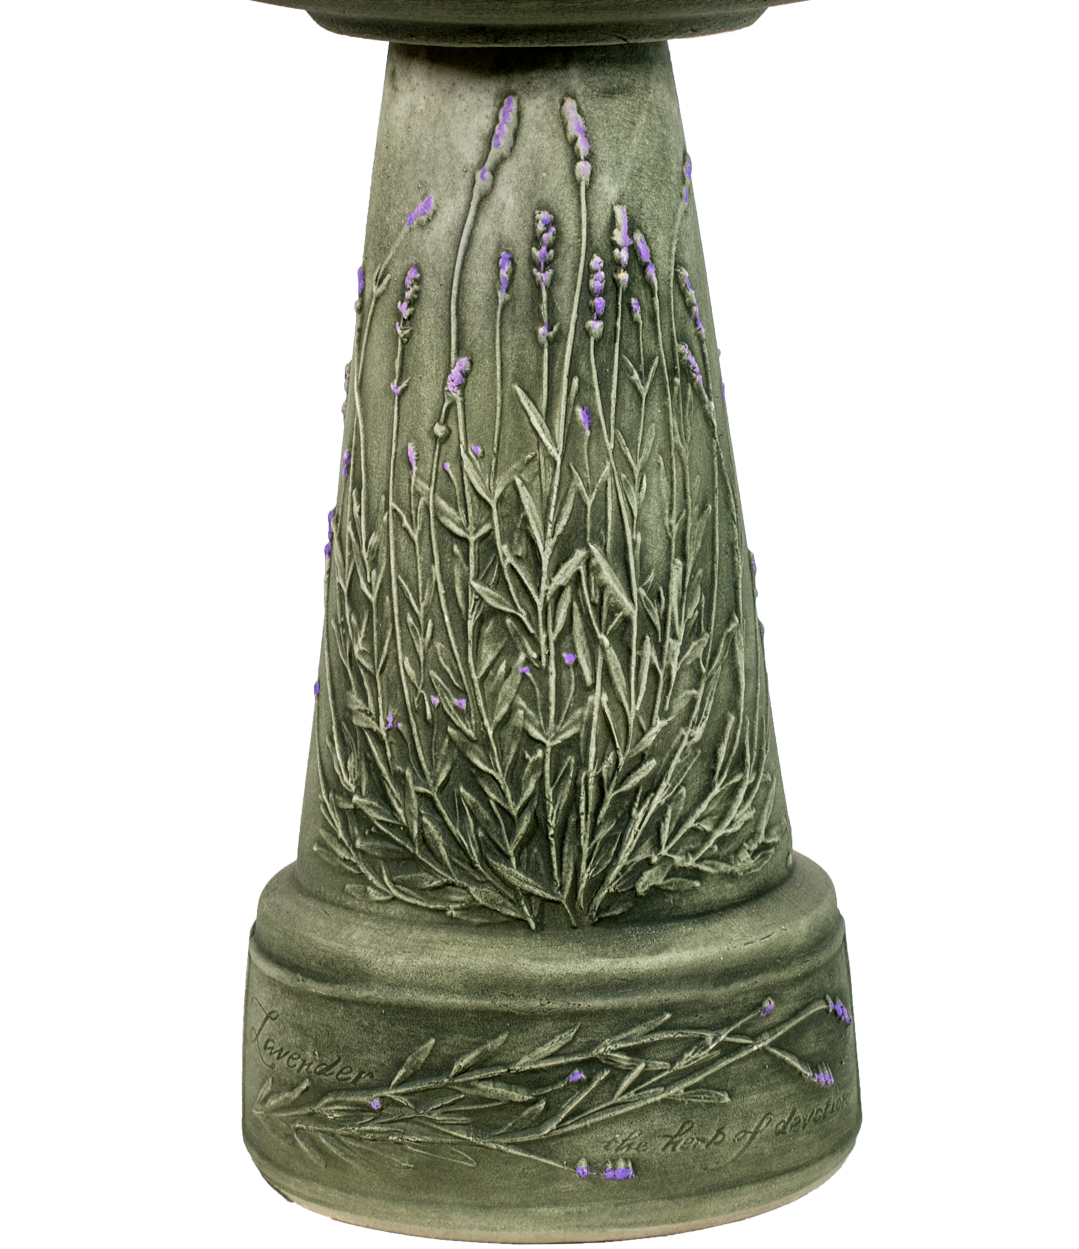 green aged birdbath pedestal with hand painted lavender stems